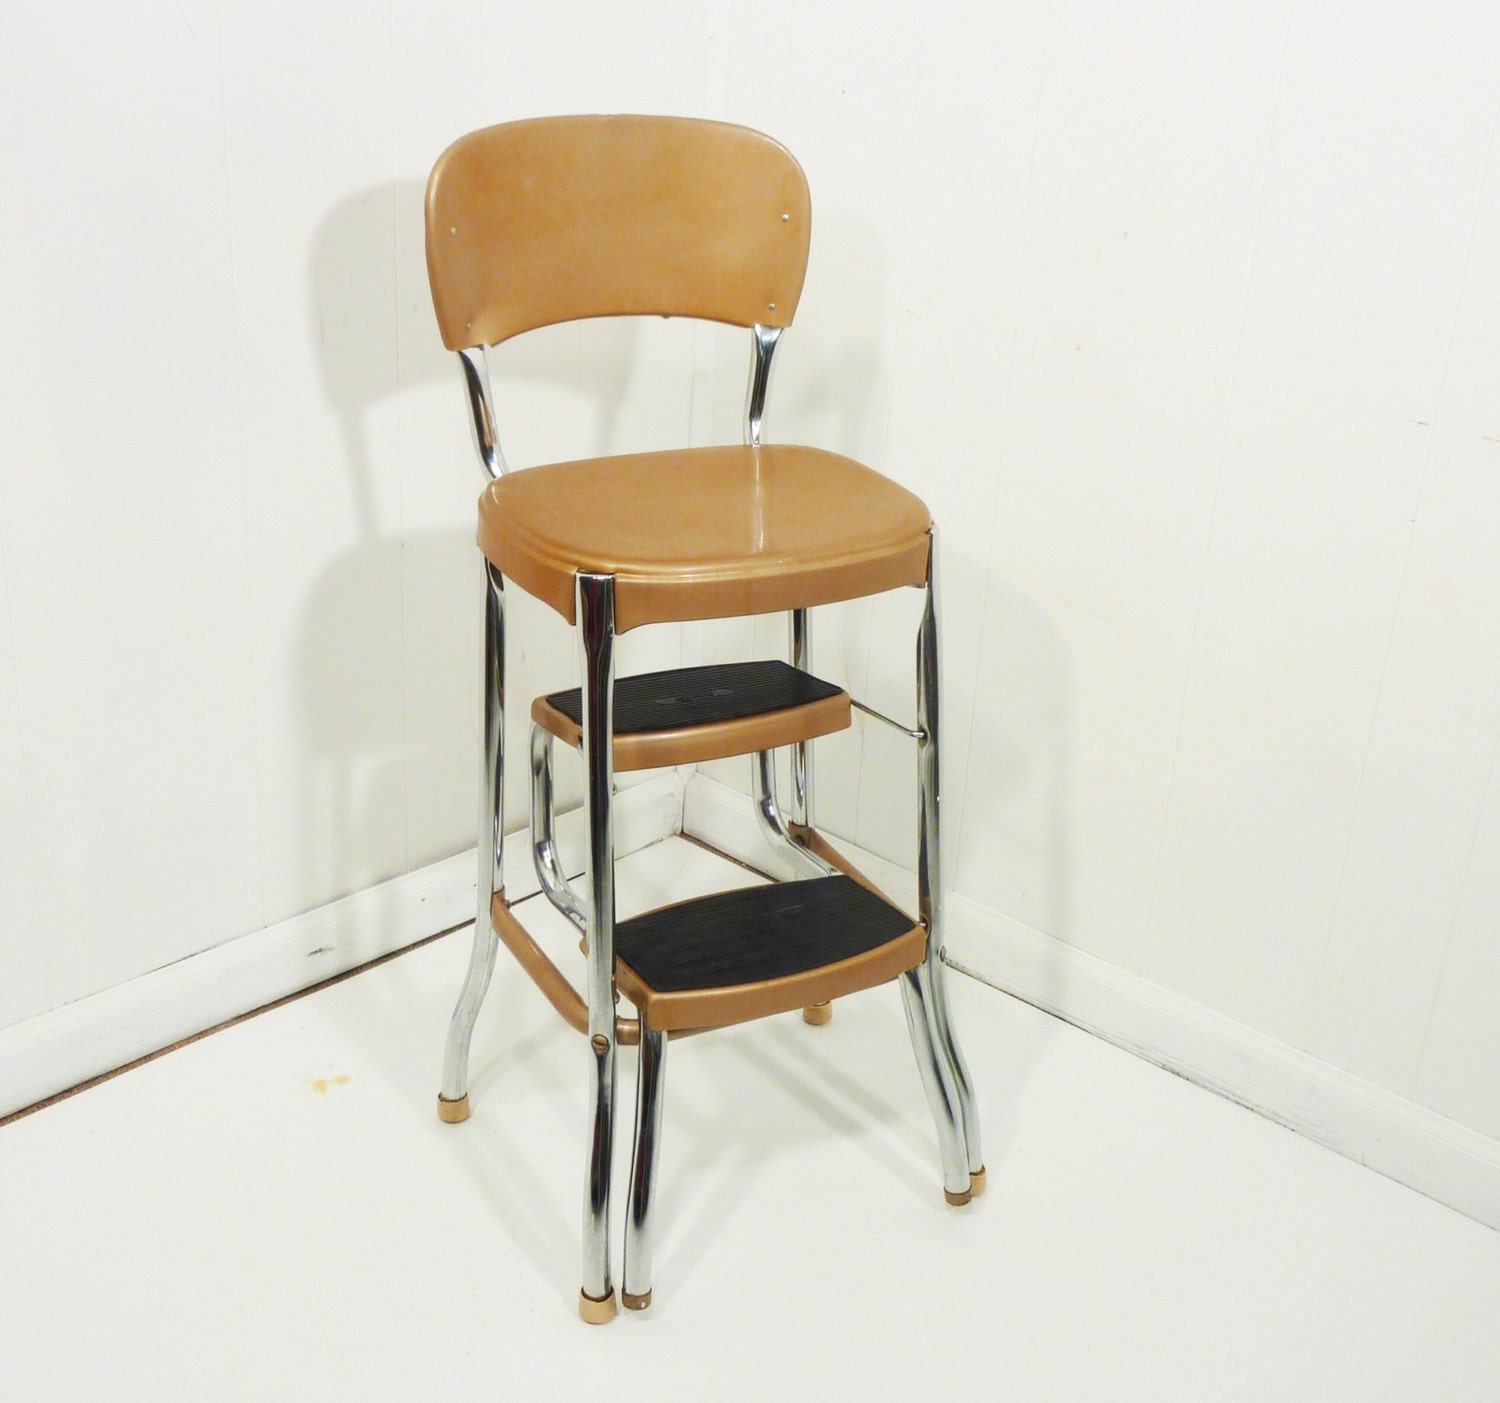 Clean retro 50s vintage step stool kitchen stool chair